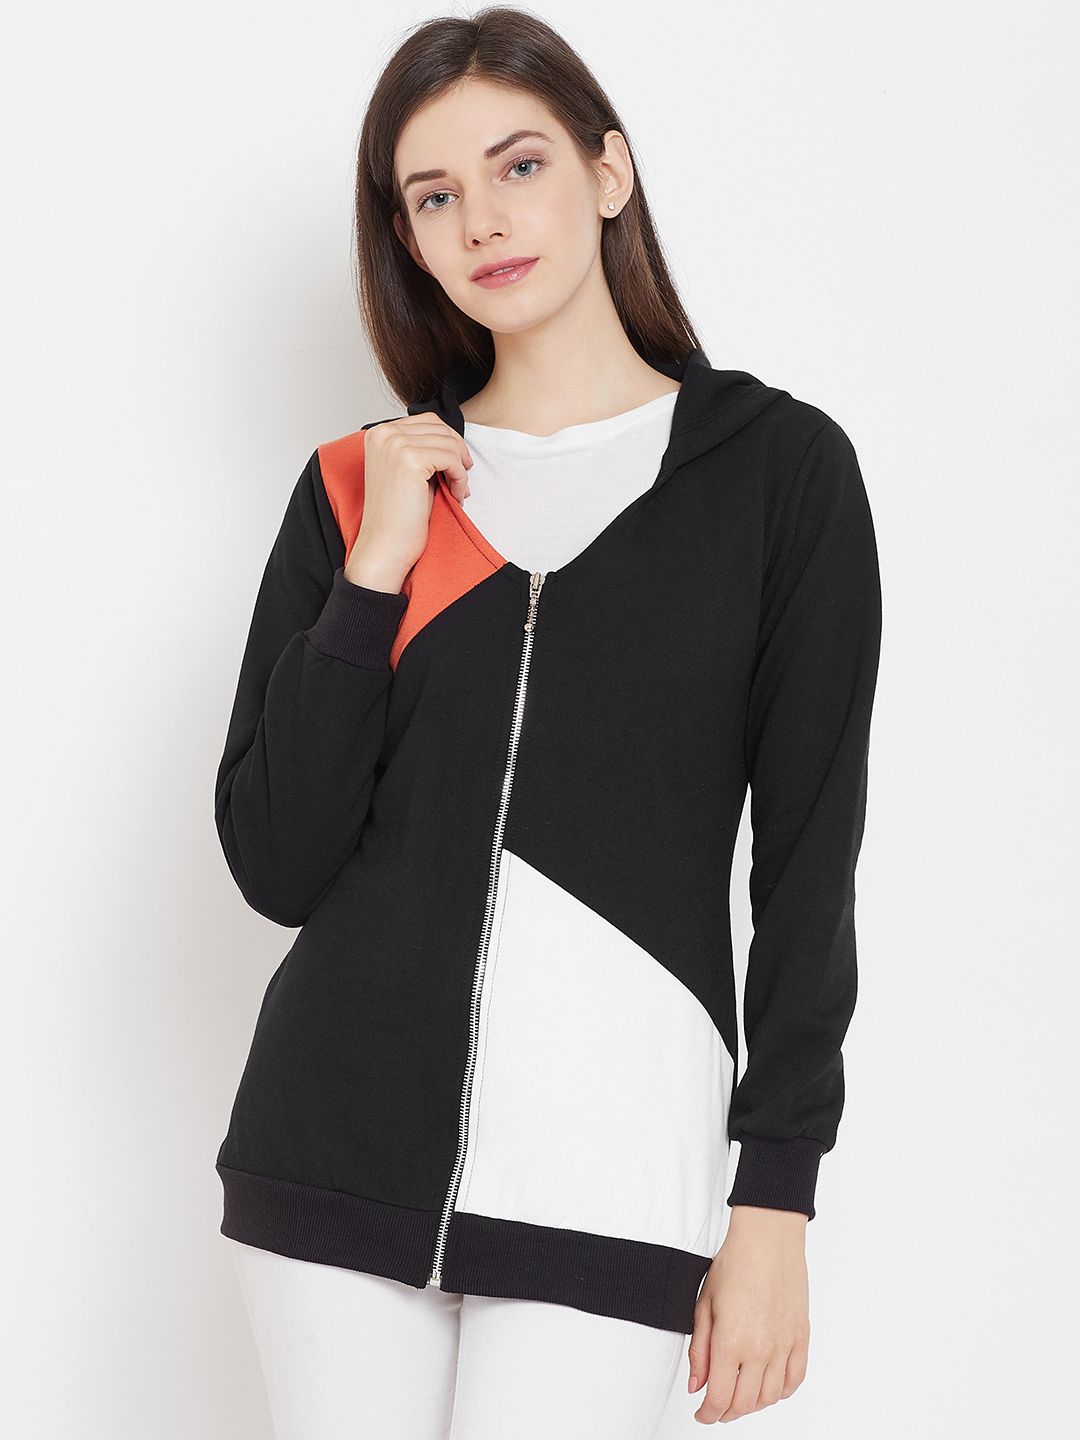 Belle Fille Women Black & Orange Colourblocked Hooded Sweatshirt Price in India